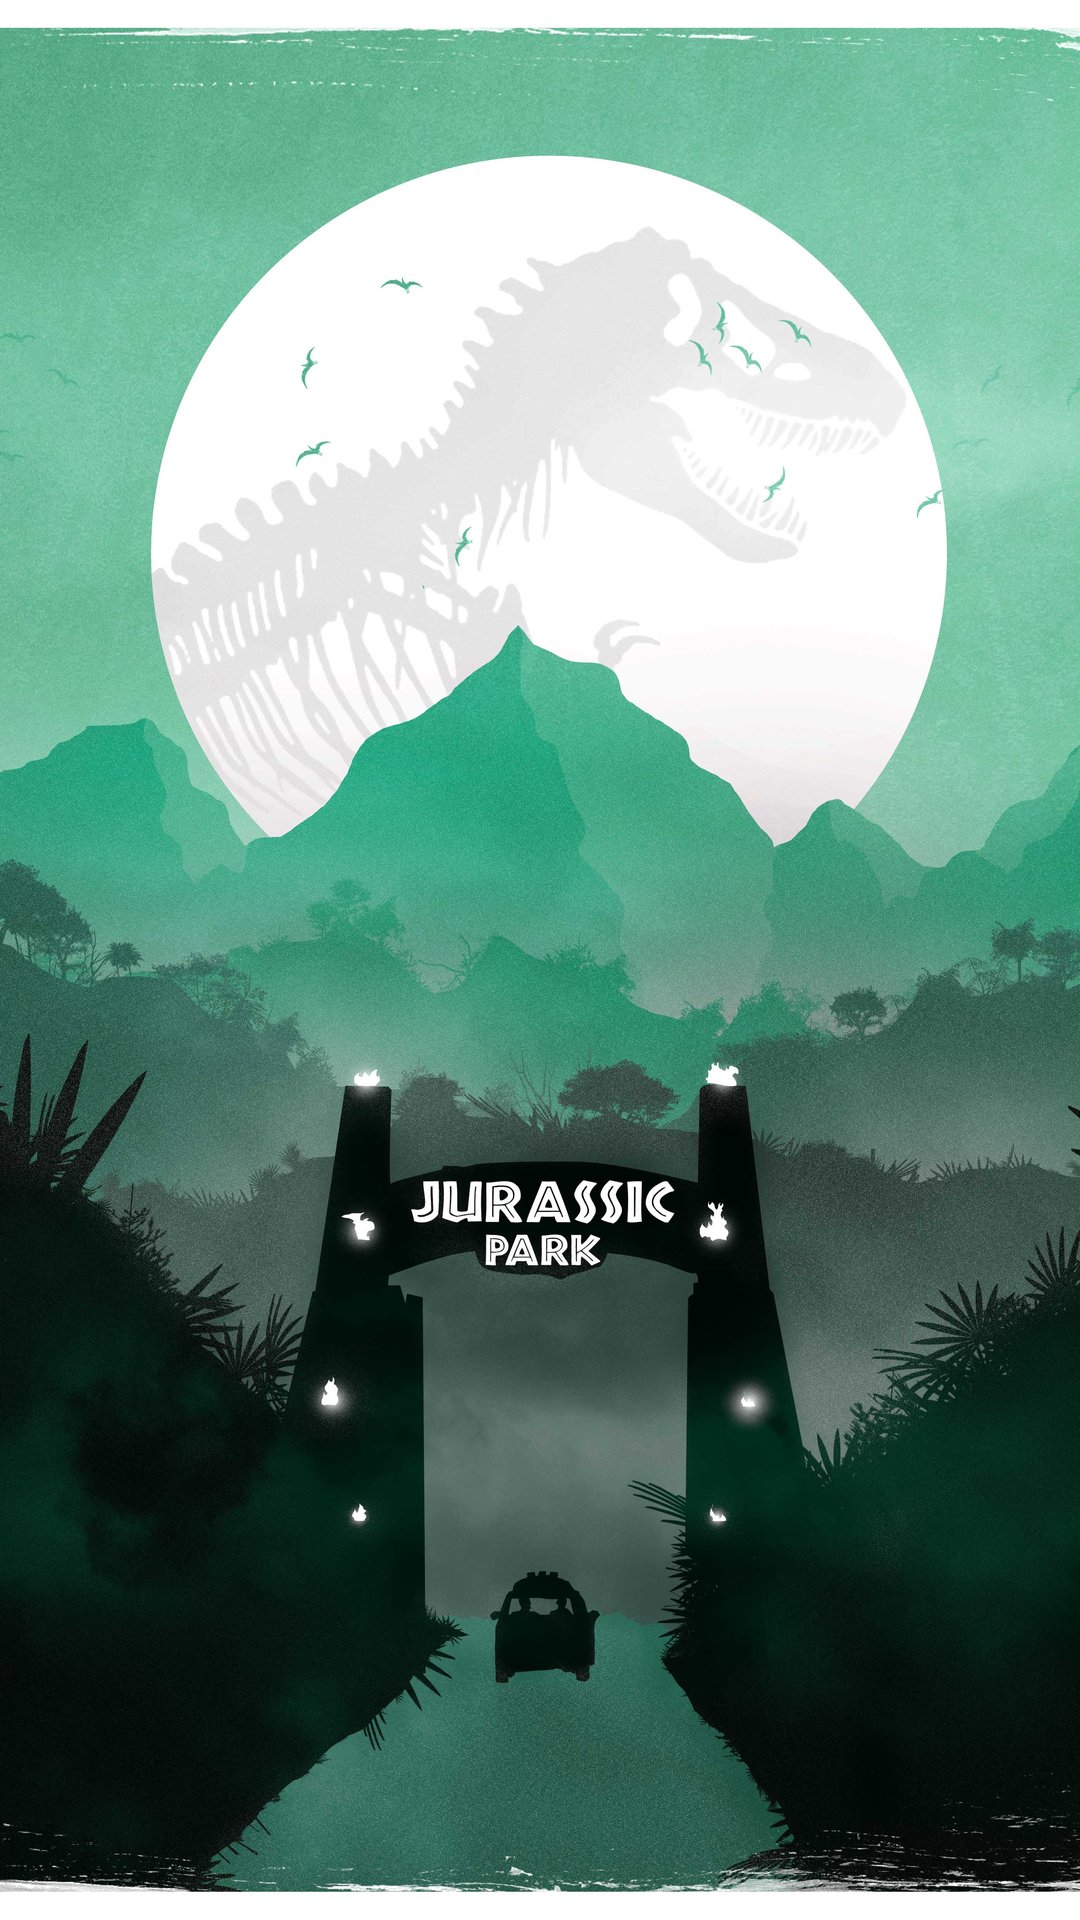 Jurassic Park Raptor iPhone Wallpaper by abekowalski on DeviantArt